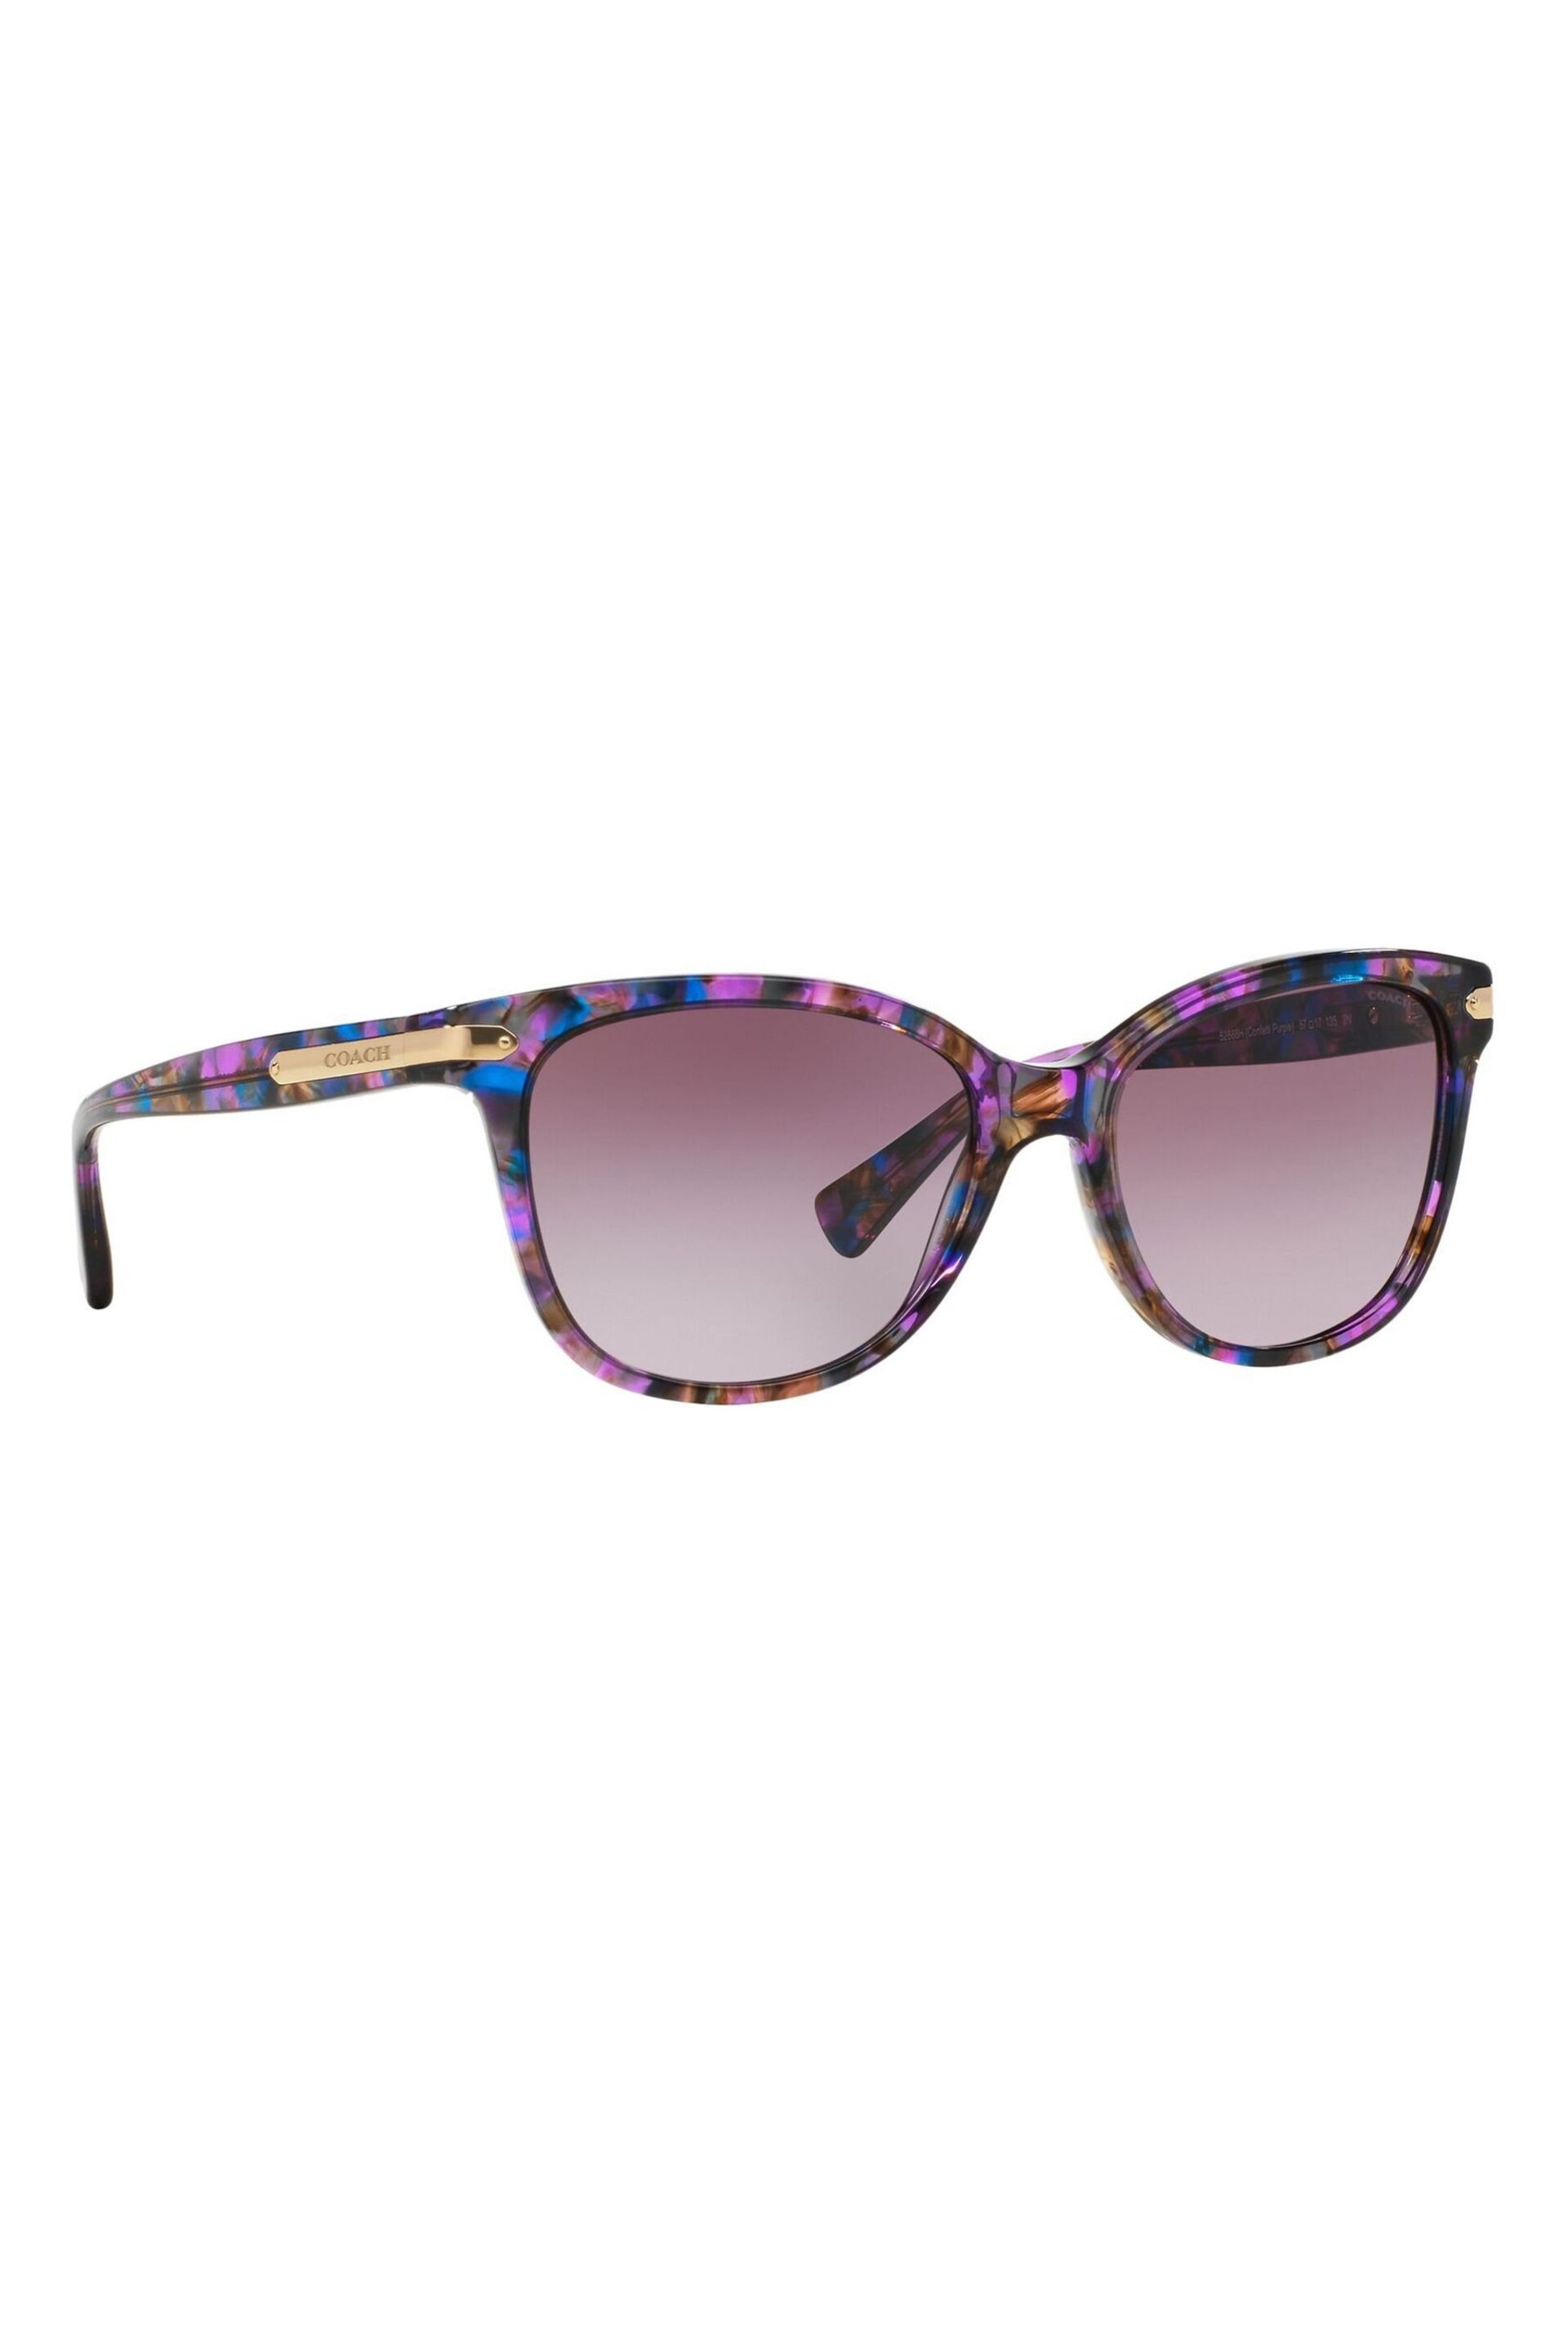 COACH Purple Sunglasses - Image 1 of 12